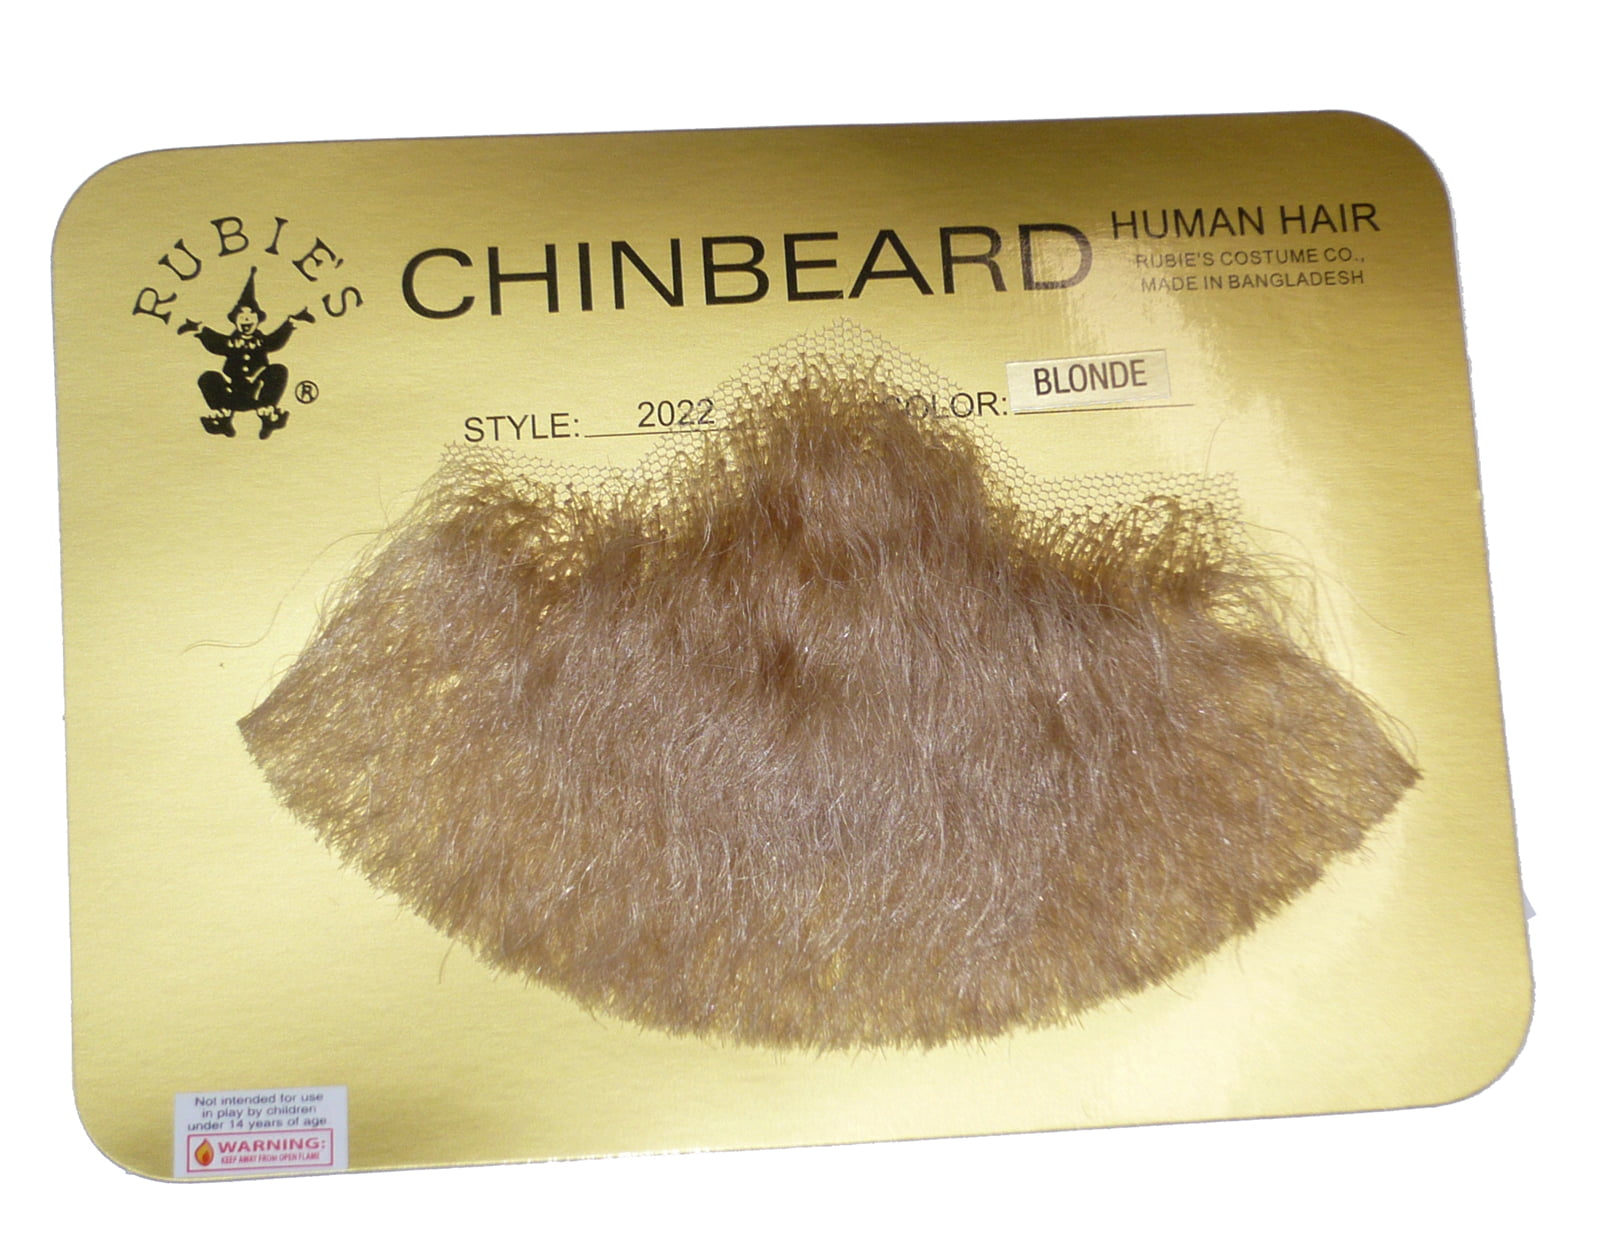 Blonde Human Hair Goatee Chin Beard Costume Beard 2022 